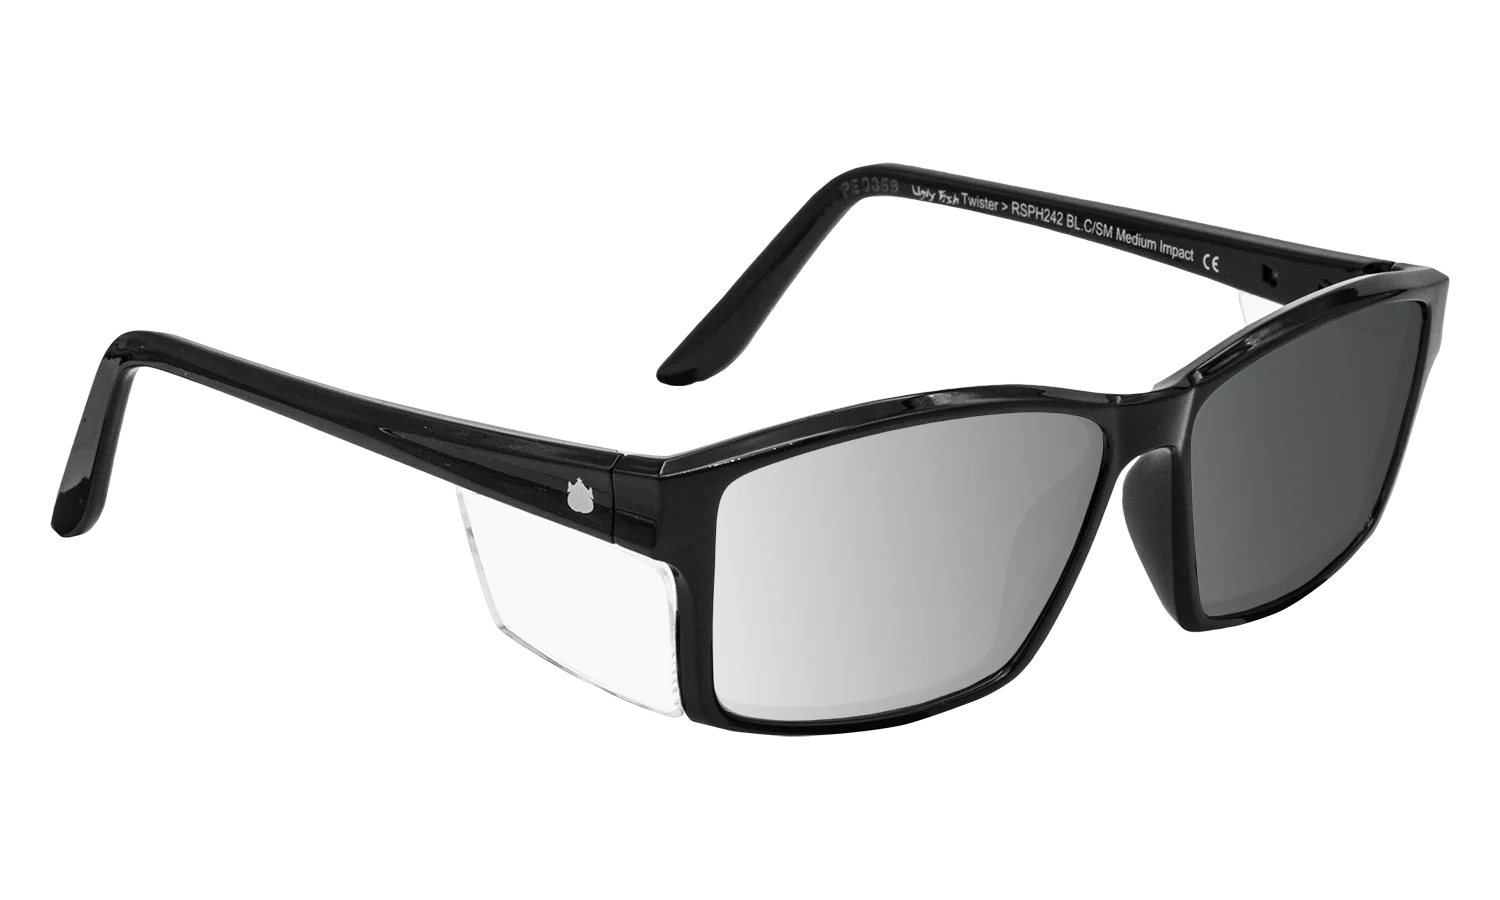 Ugly Fish RSPH242 BL.C/SM Twister Photochromic Safety Glasses-Black Frame/Smoke Photochromic Lens